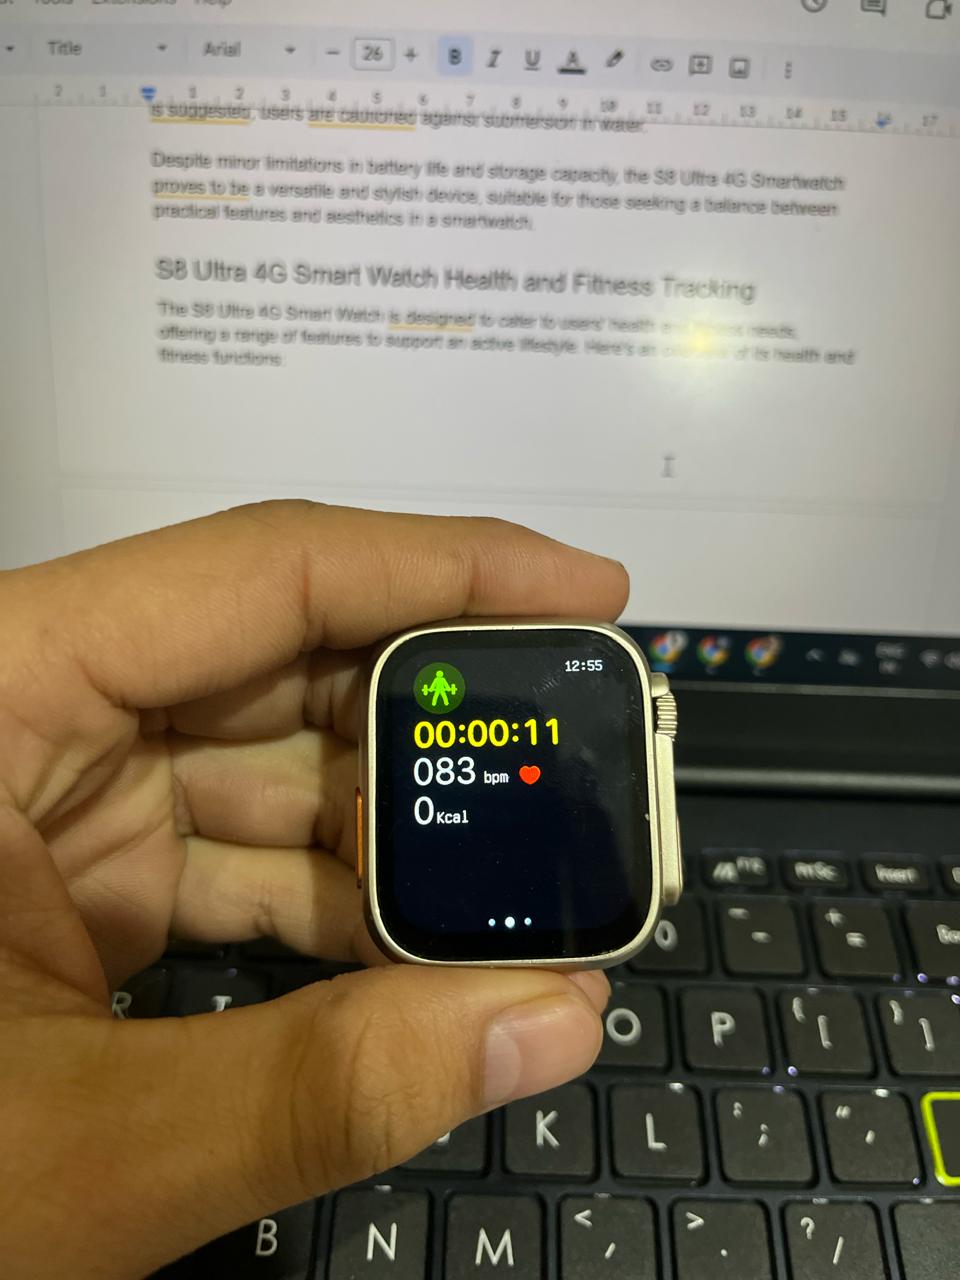 S8 Ultra 4g Smart Watch Features